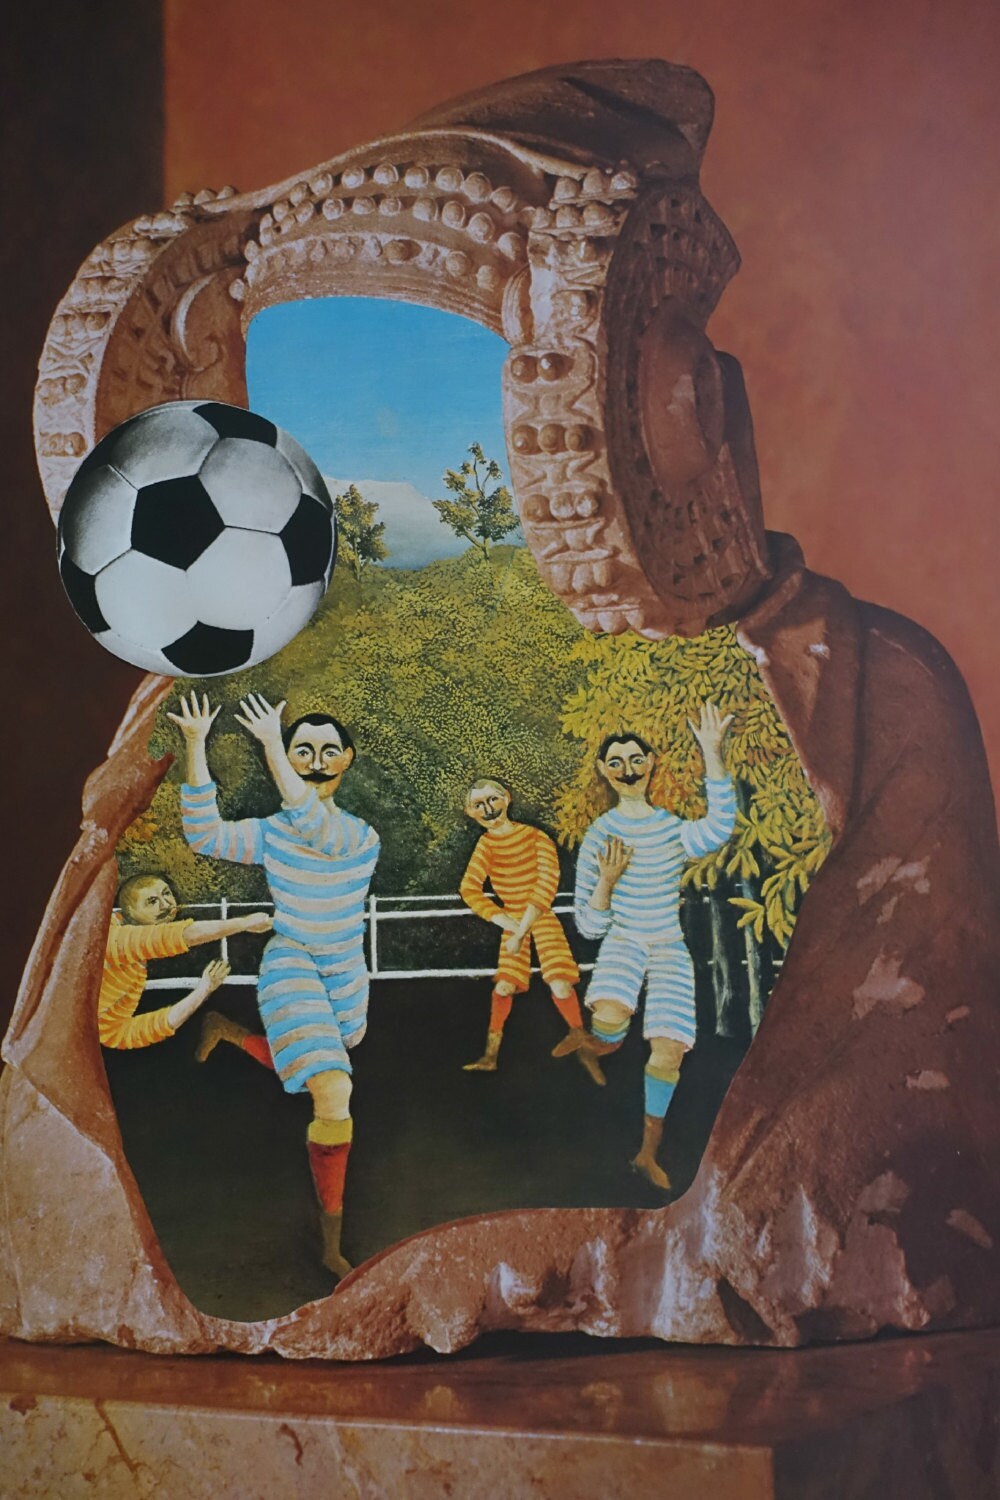 1982 World Cup Spain (Elche) - Original Vintage Poster